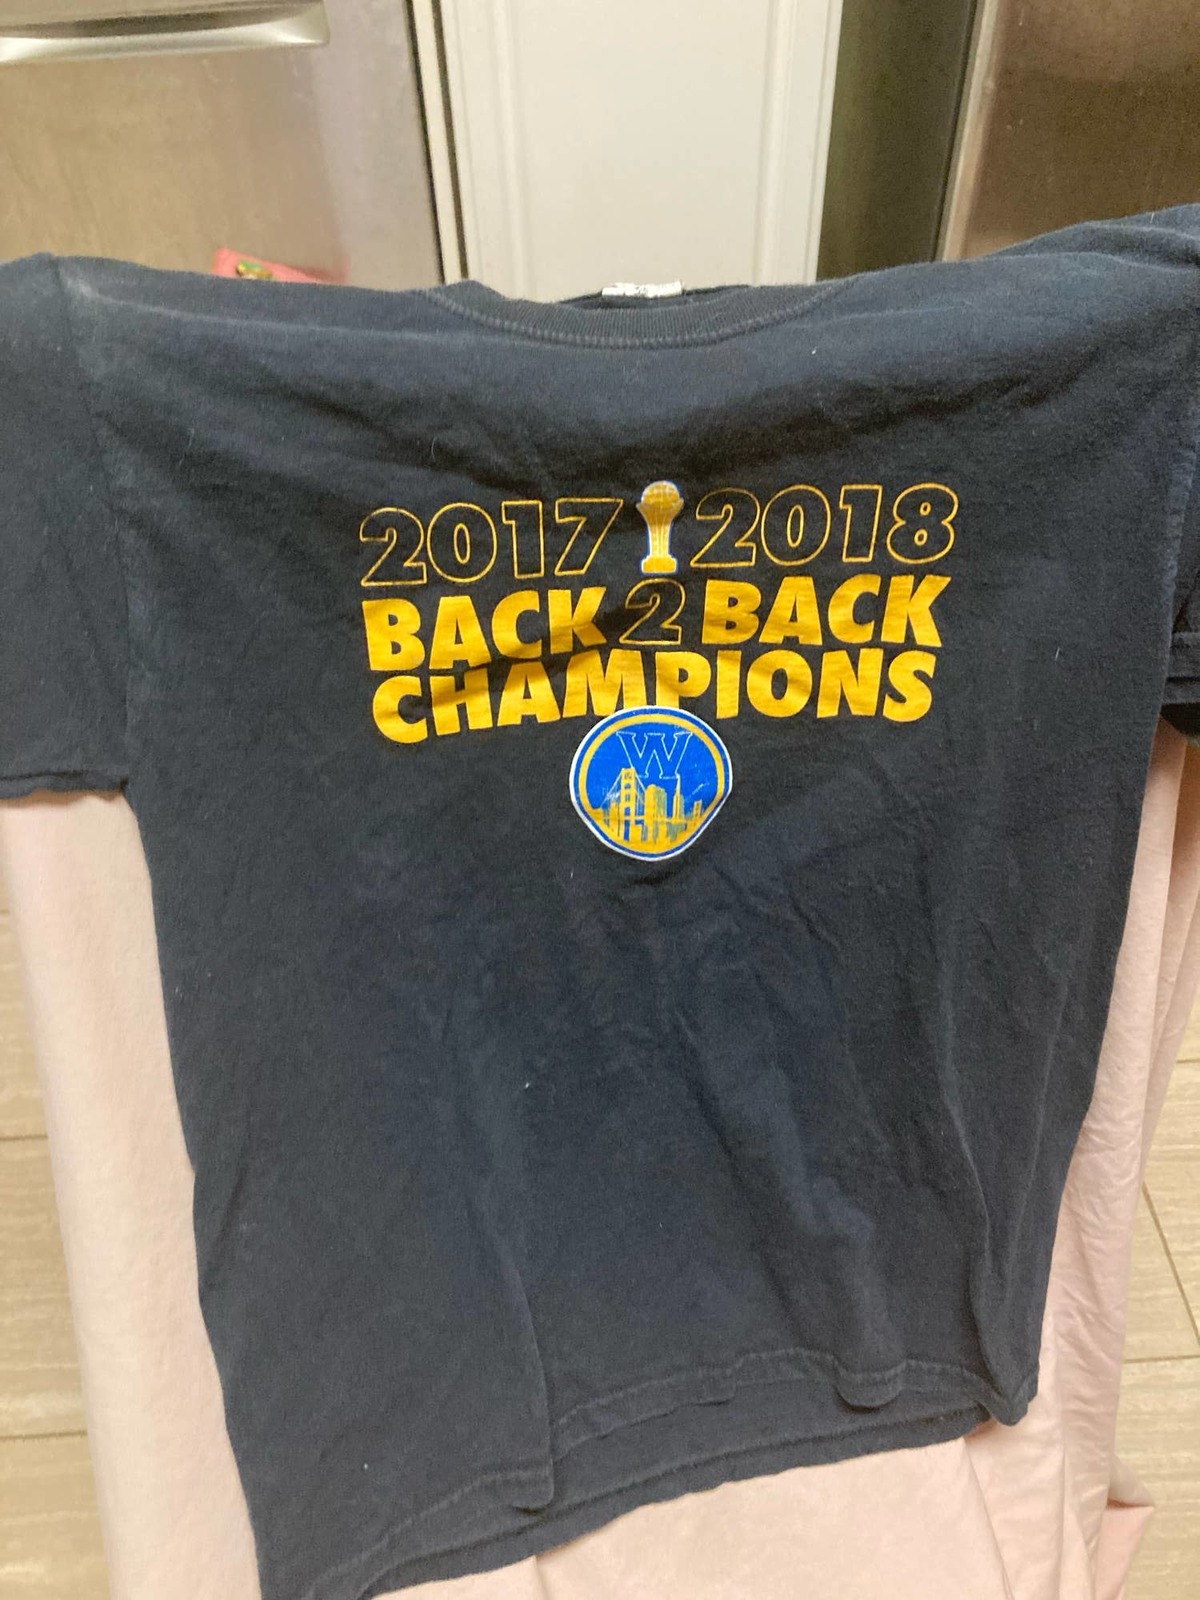 2017-18 Back 2 Back Champions Golden State Worries Kids Shirt Size XL - $14.85